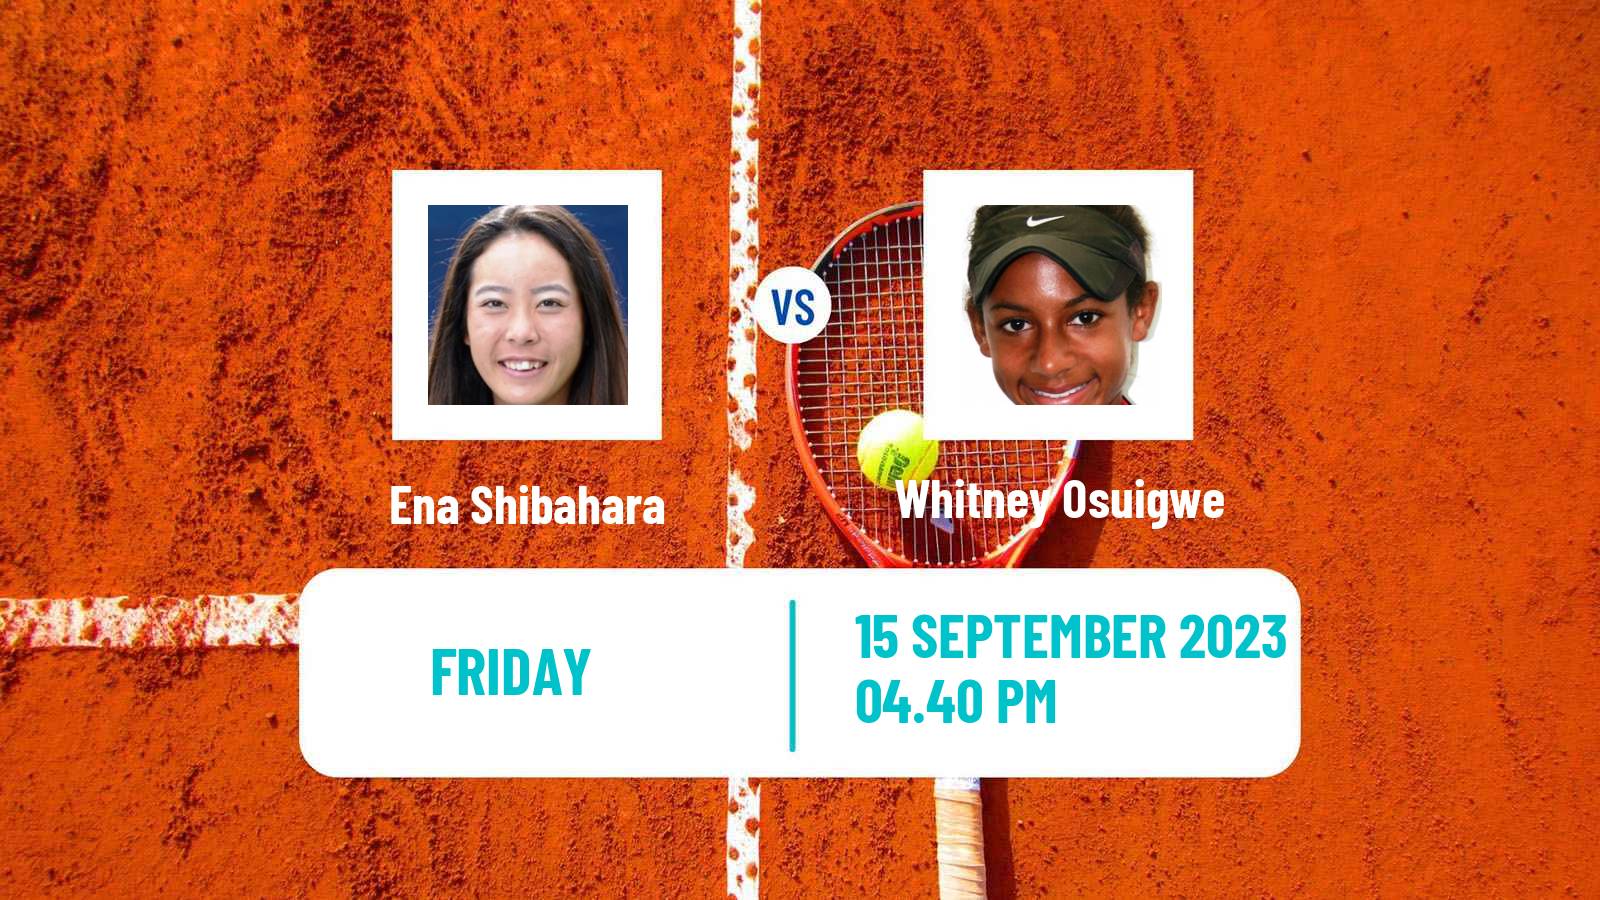 Tennis WTA Guadalajara Ena Shibahara - Whitney Osuigwe